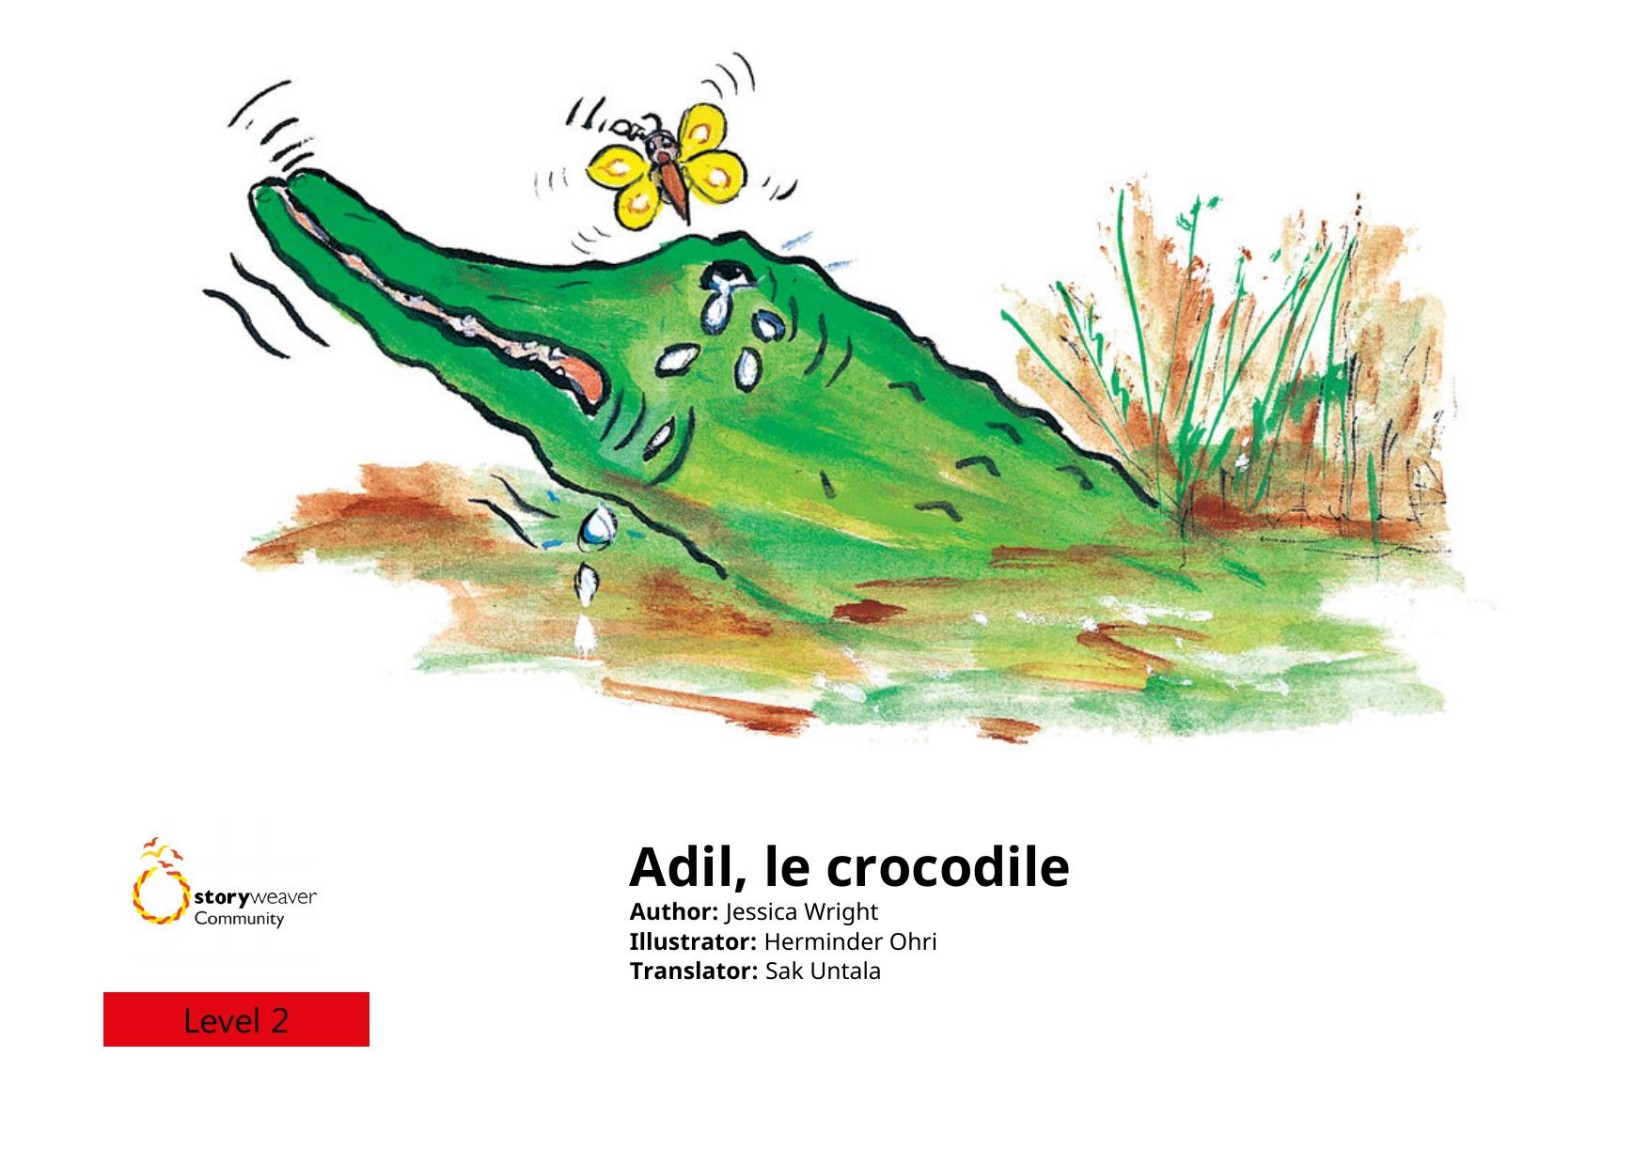 Adil, le crocodile